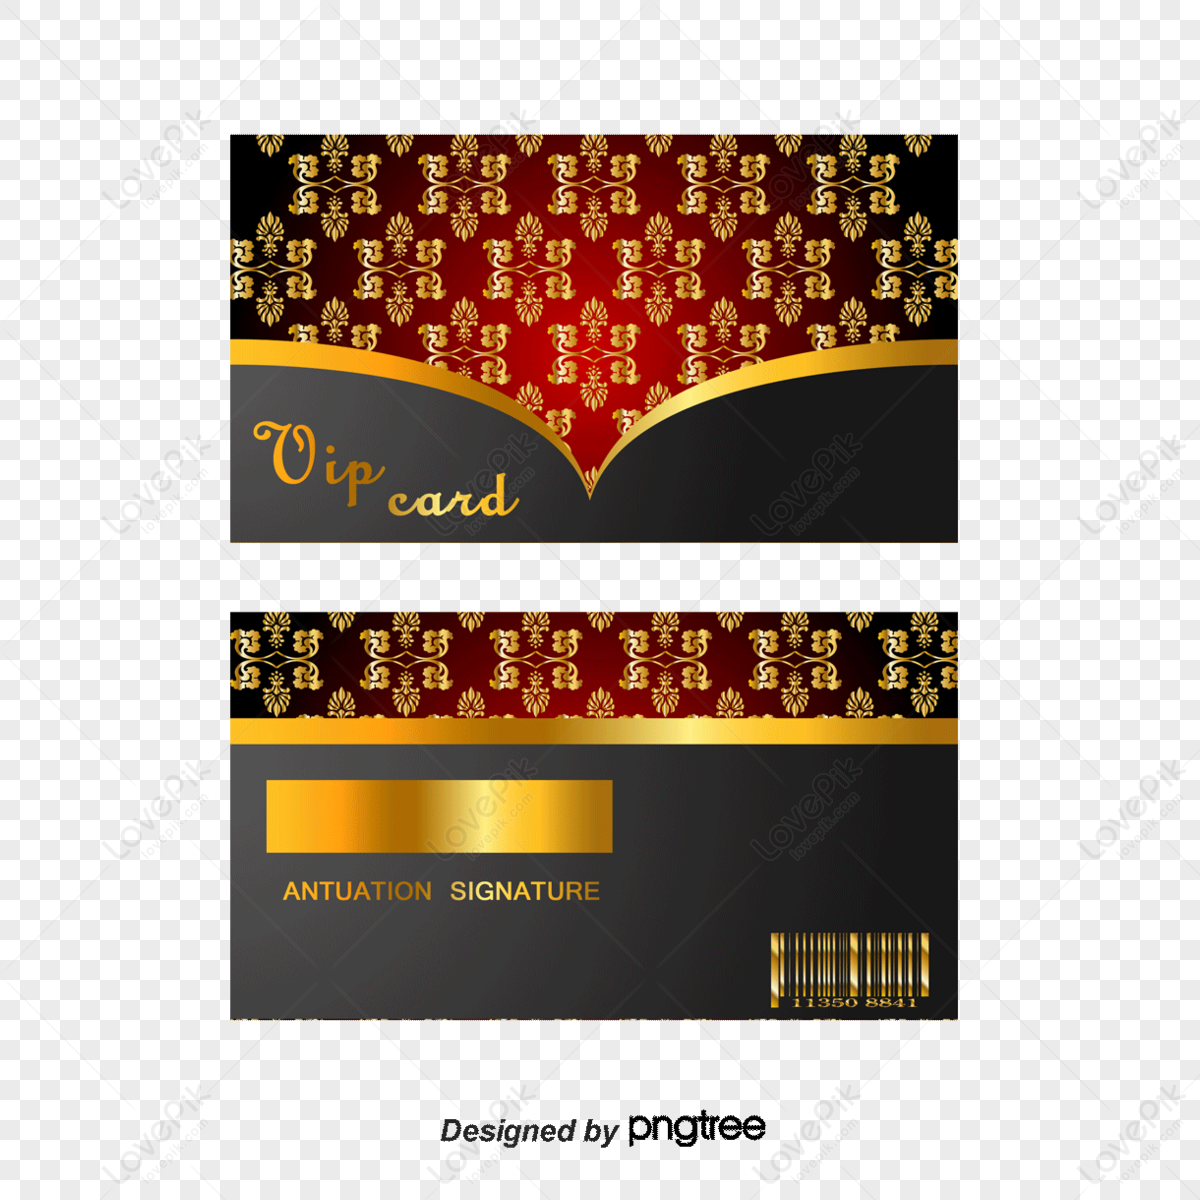 Membership Card Vip Vip Card Orange Membership Card Psd Template Download  on Pngtree